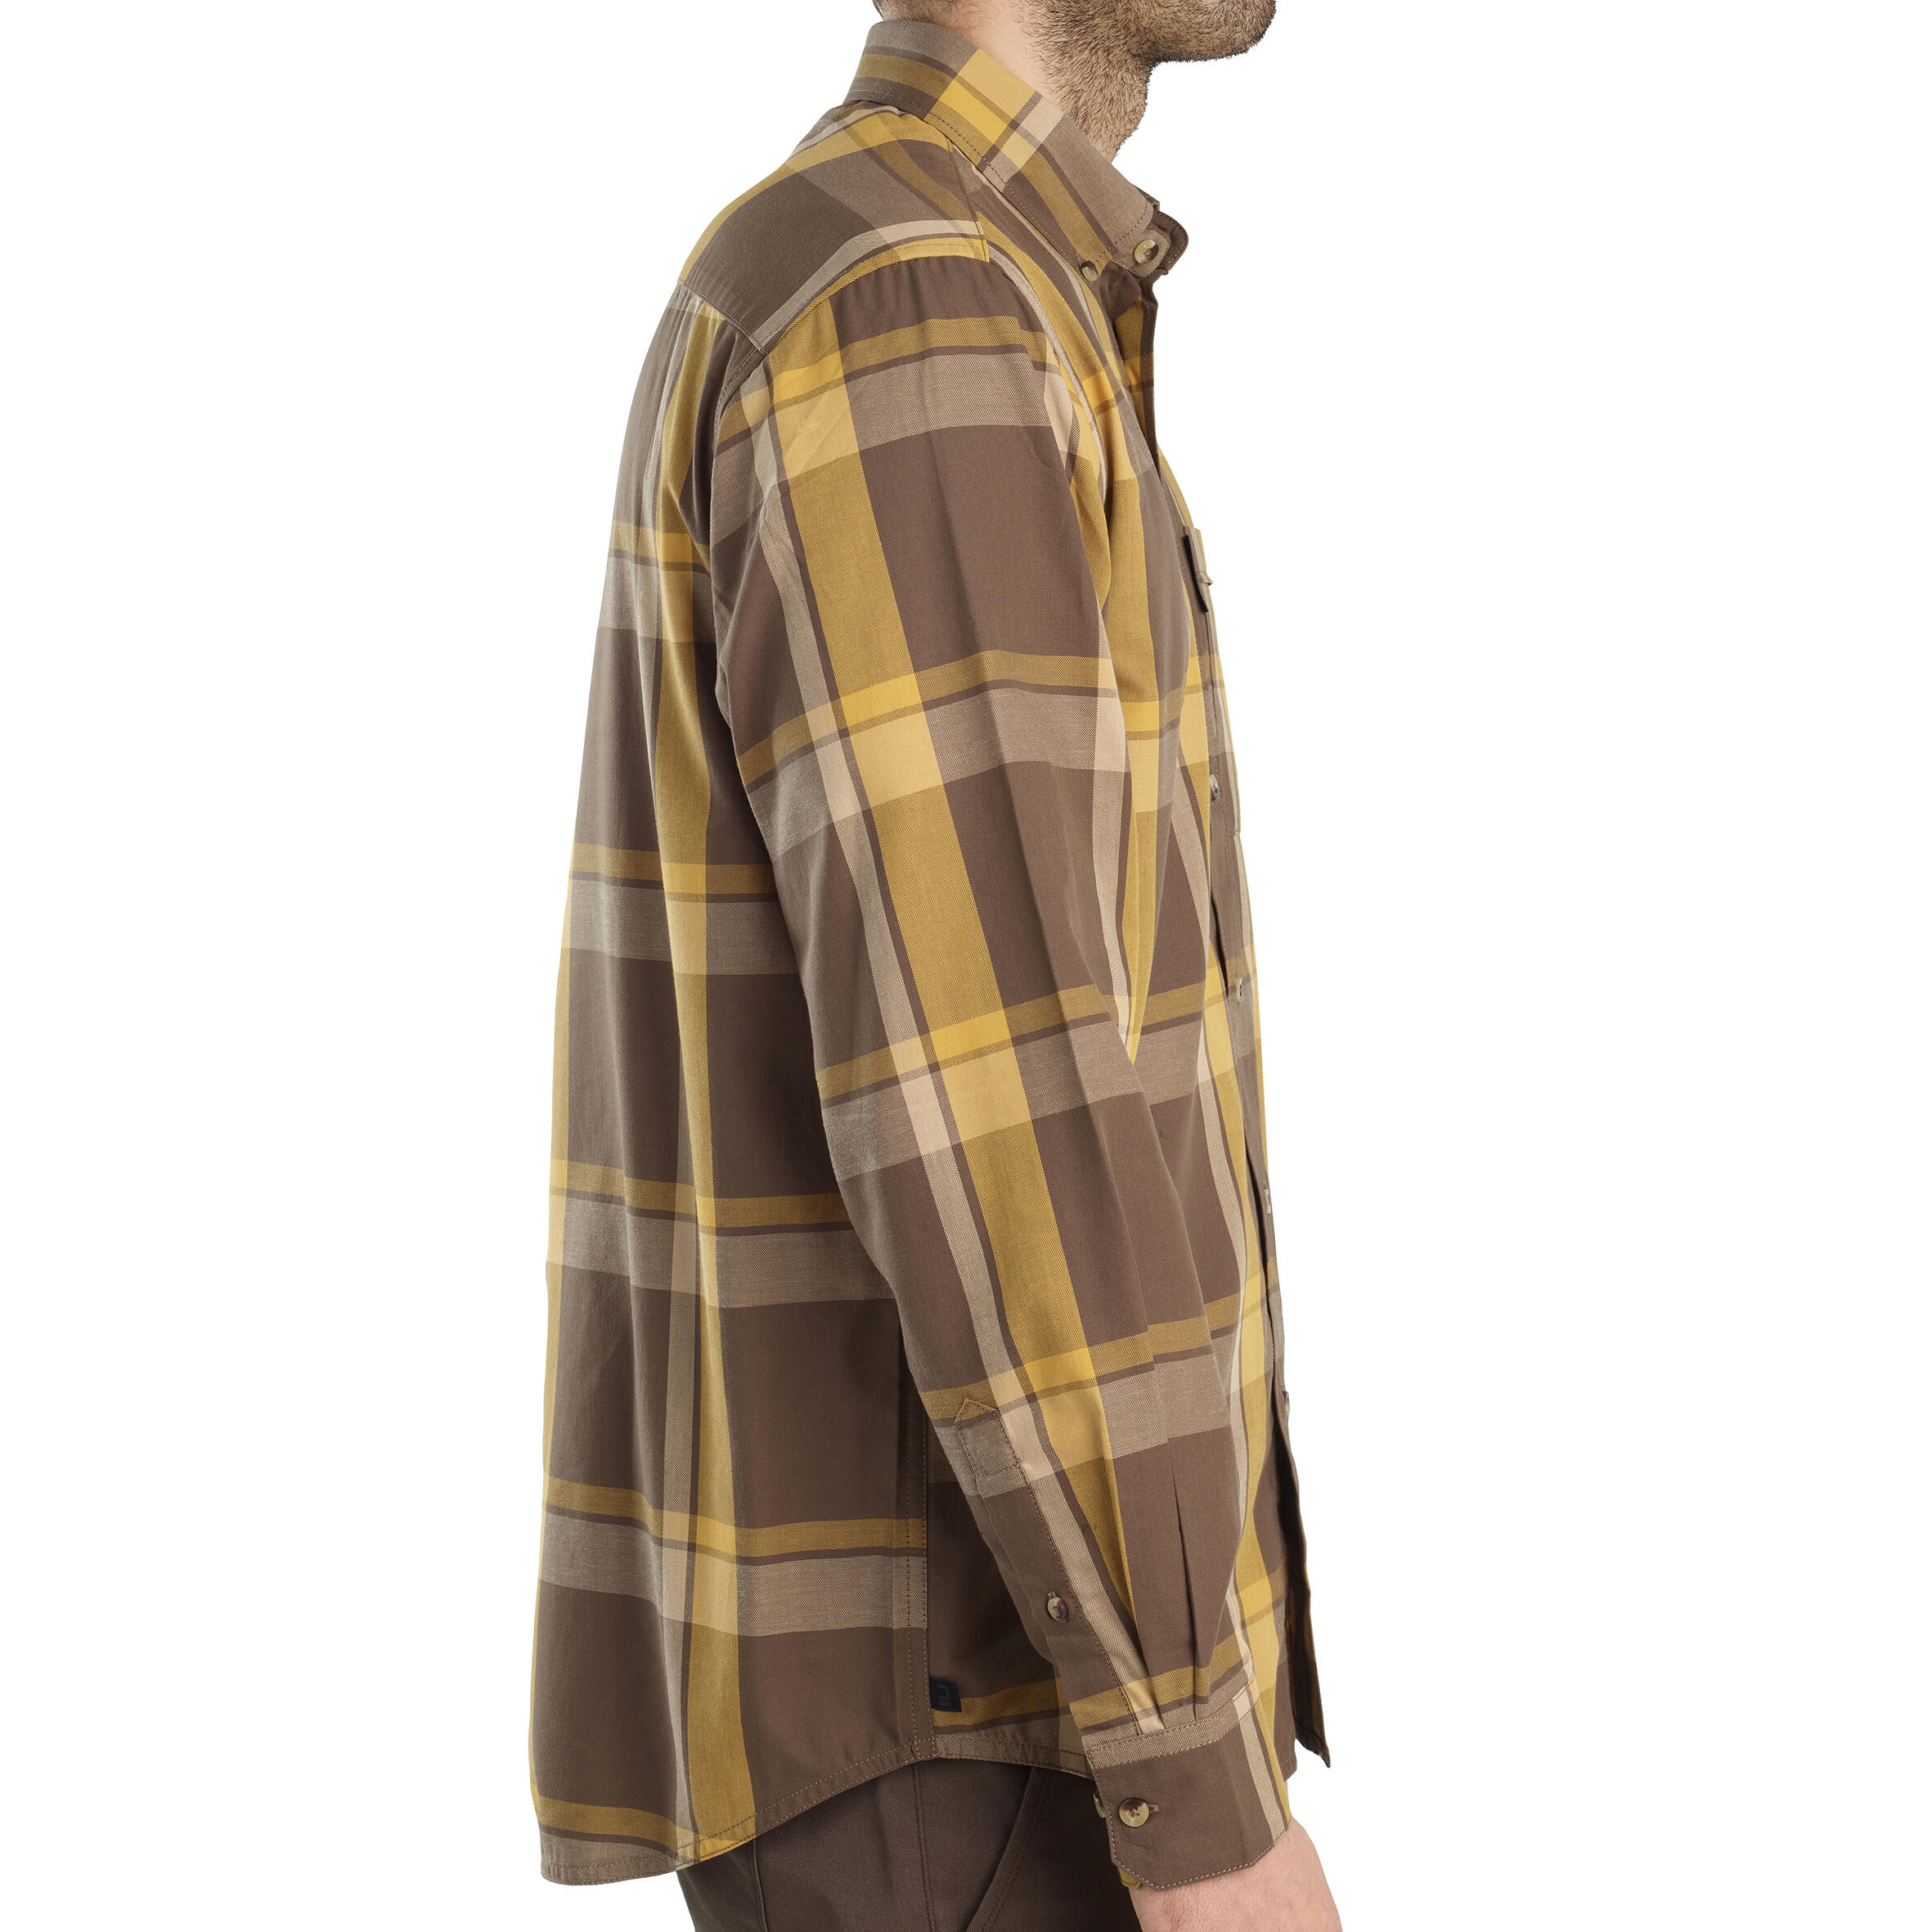 Long sleeve hunting shirt SG100 LTD - Brown and Yellow 5/7